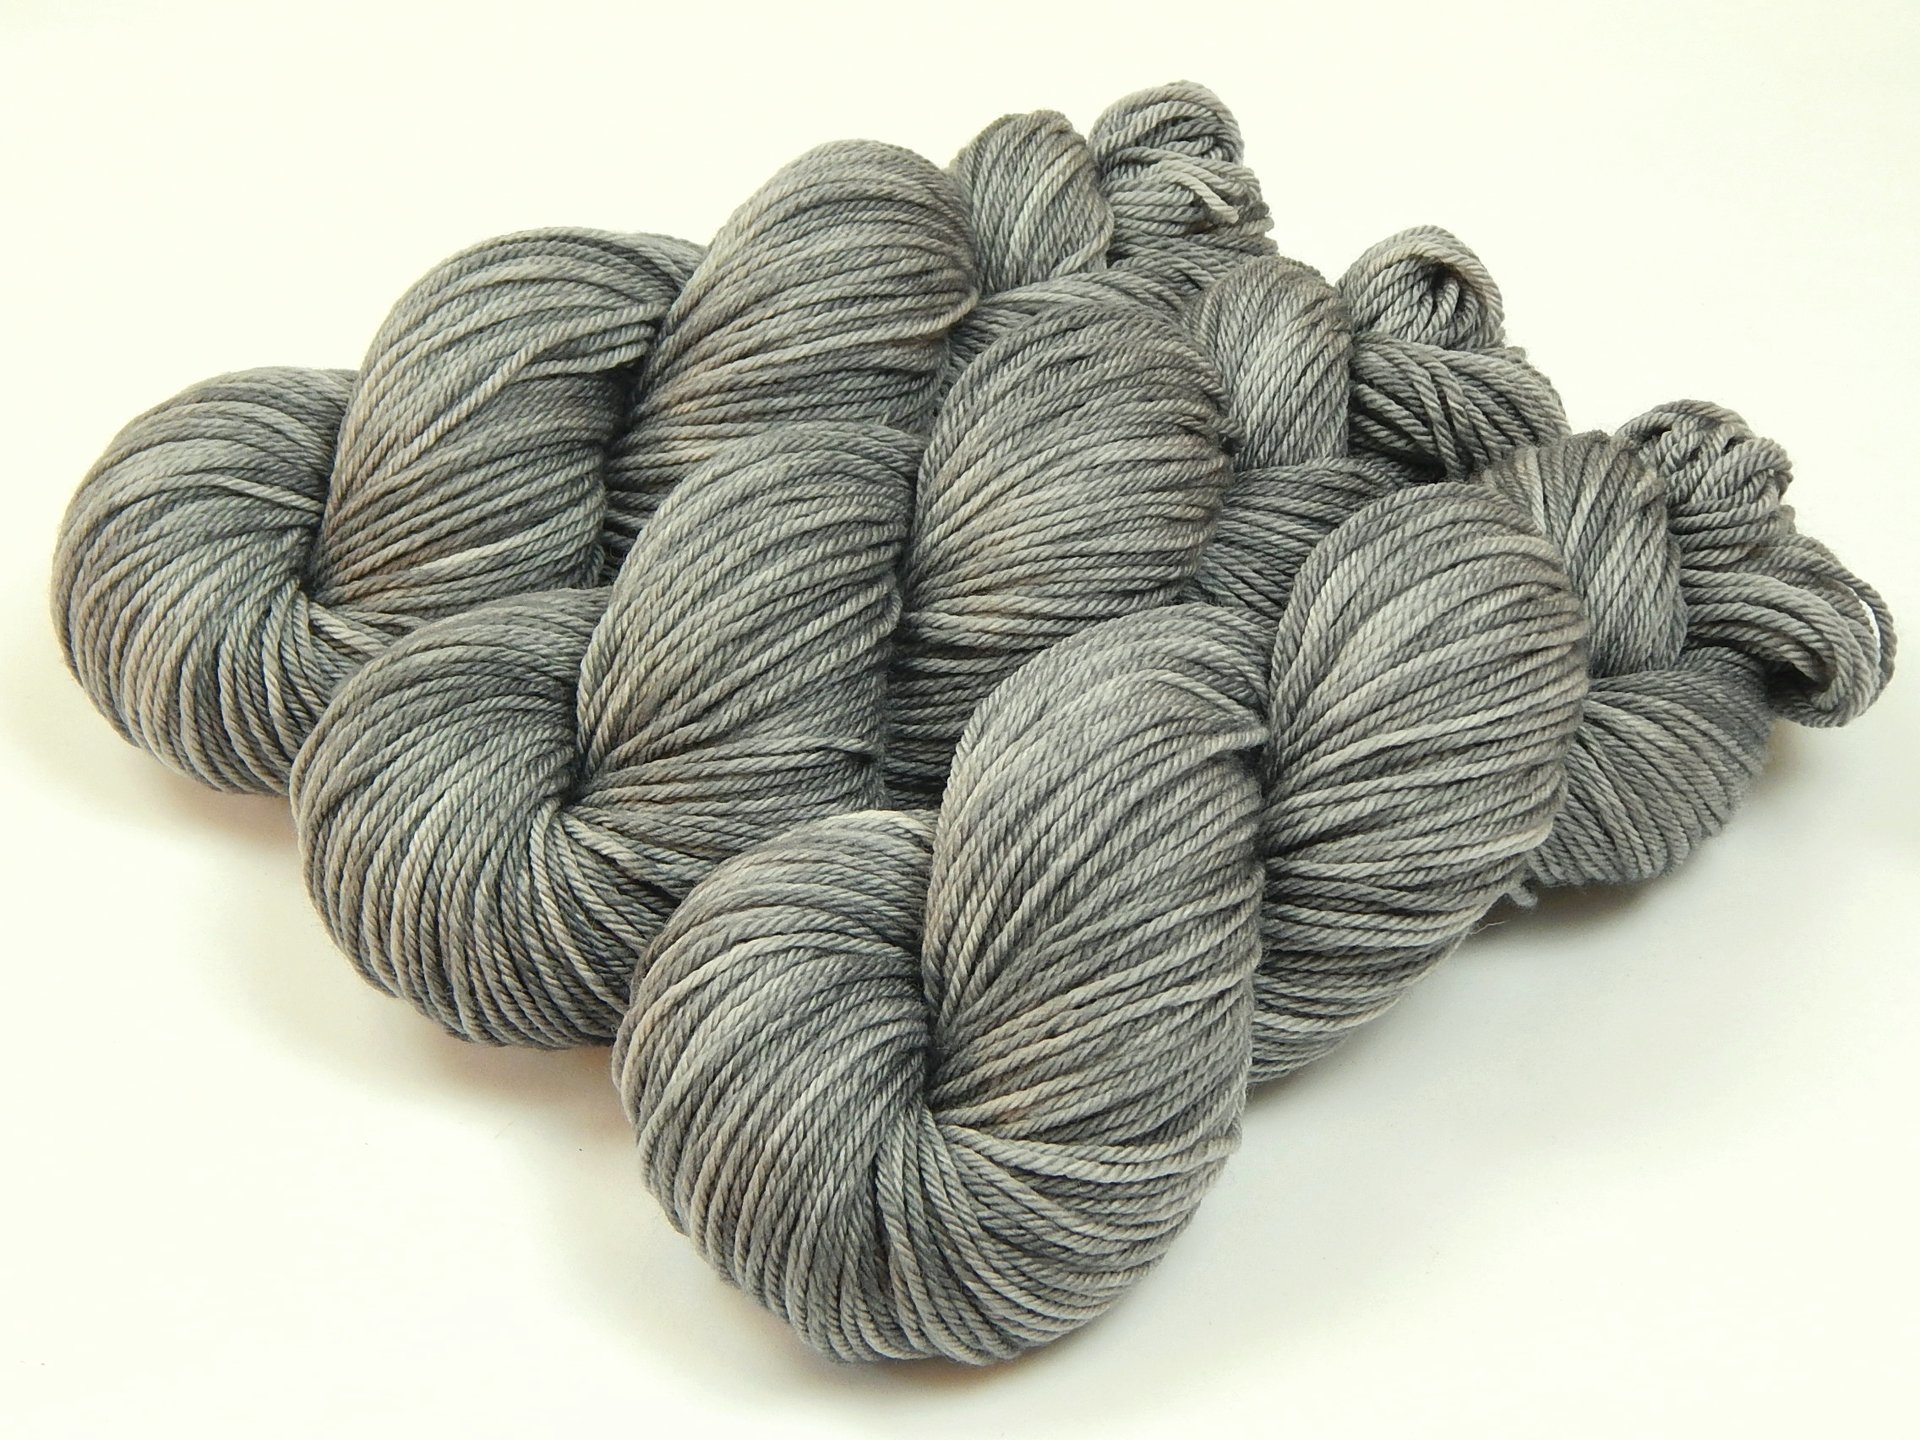 Hand Dyed Yarn, Worsted Weight Superwash Merino Wool - Pewter - Semi Solid Gray Knitting Yarn, Soft Indie Dyed Tonal Grey Pure Wool Yarn